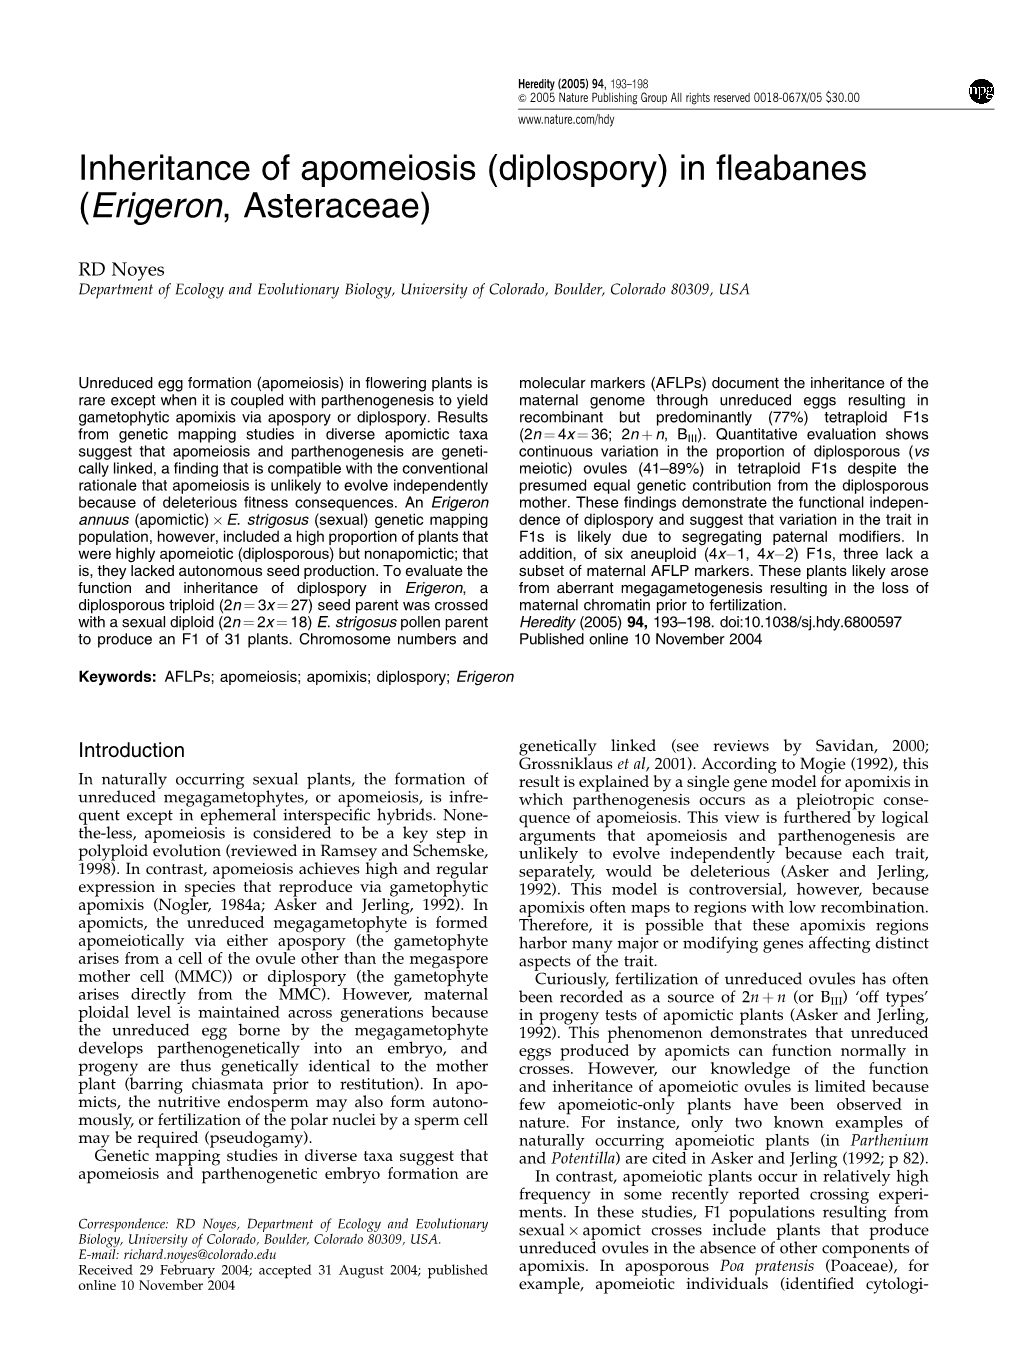 Inheritance of Apomeiosis (Diplospory) in Fleabanes (Erigeron